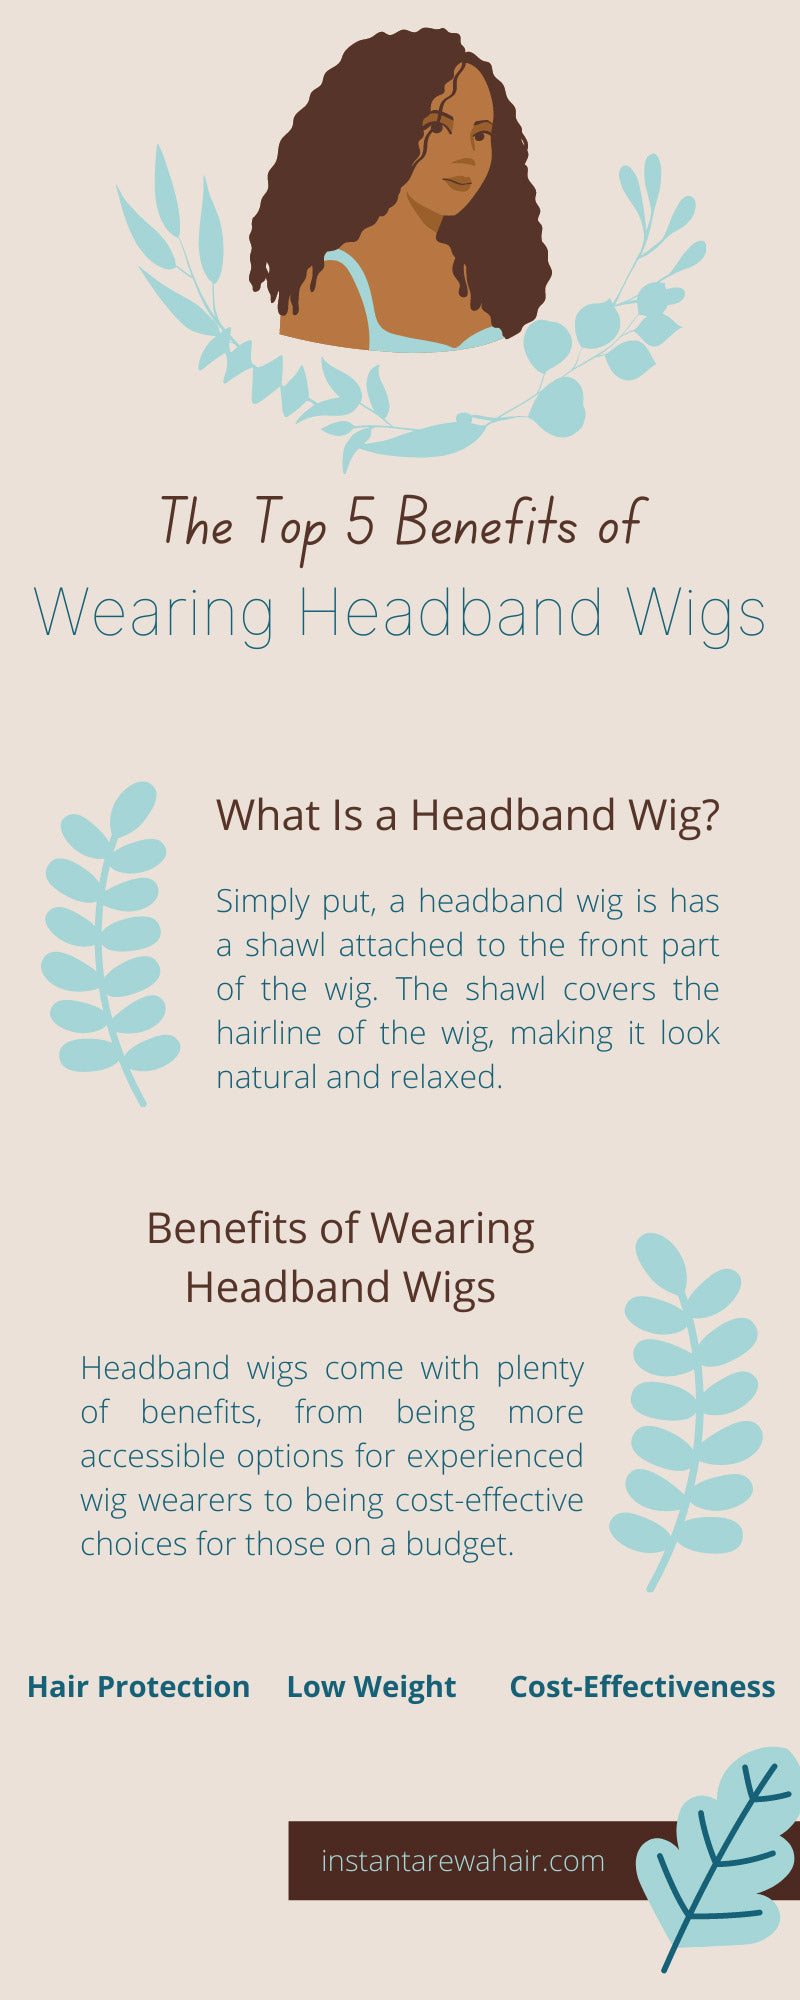 The Top 5 Benefits of Wearing Headband Wigs